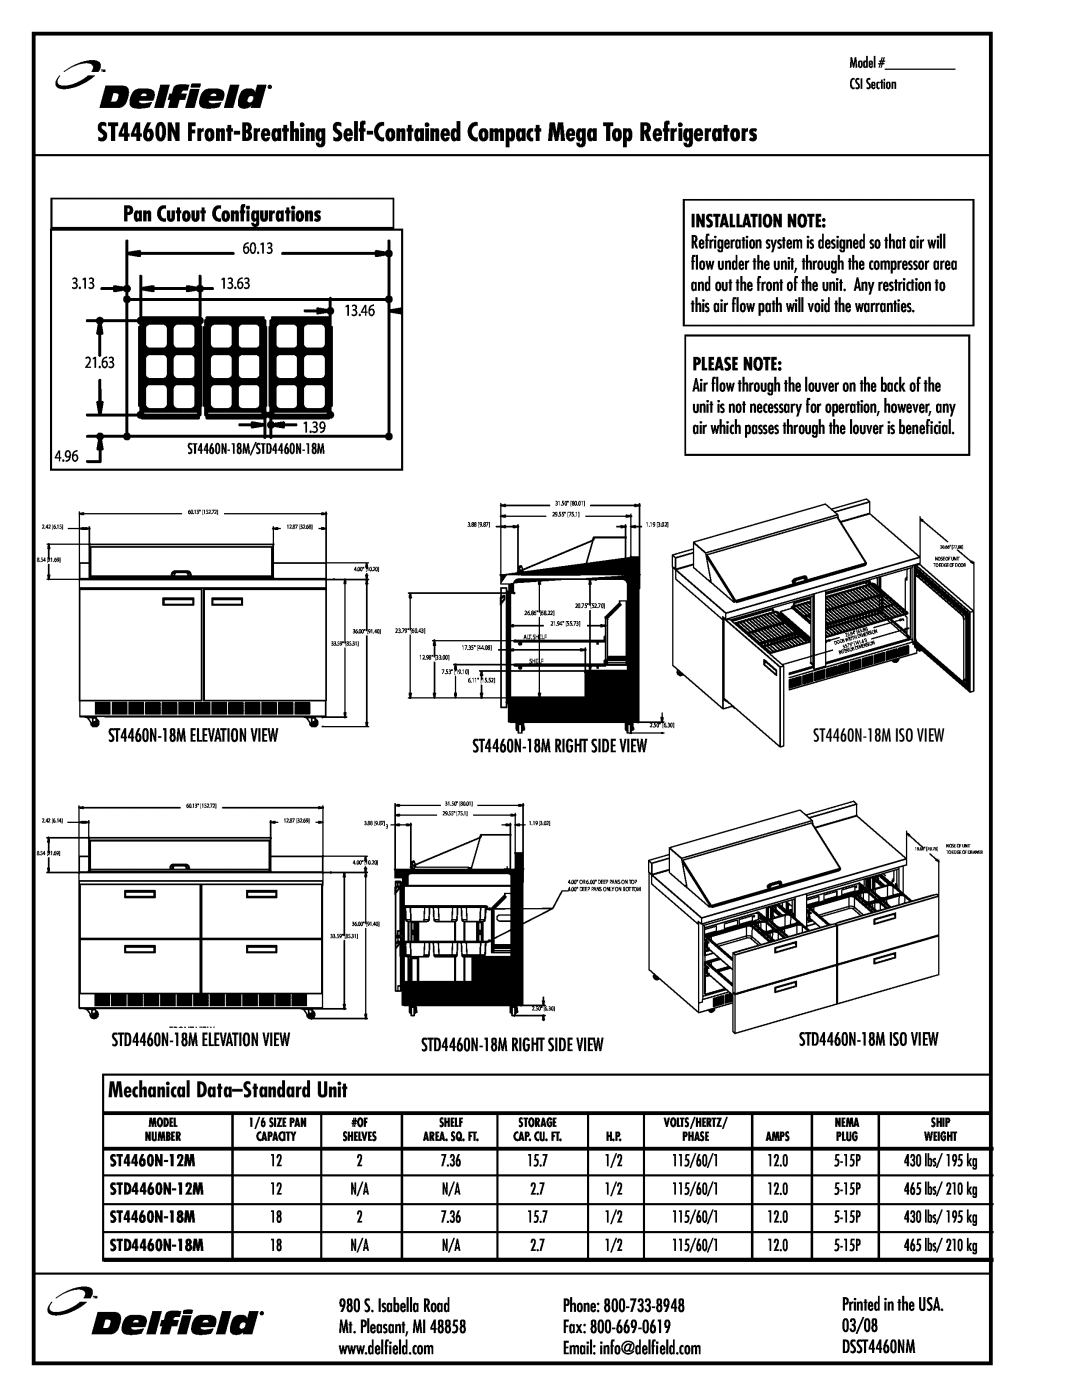 Delfield Mechanical Data–StandardUnit, , ST4460N-18MISO VIEW, STD4460N-18MISO VIEW, Pan Cutout Configurations, Fax 